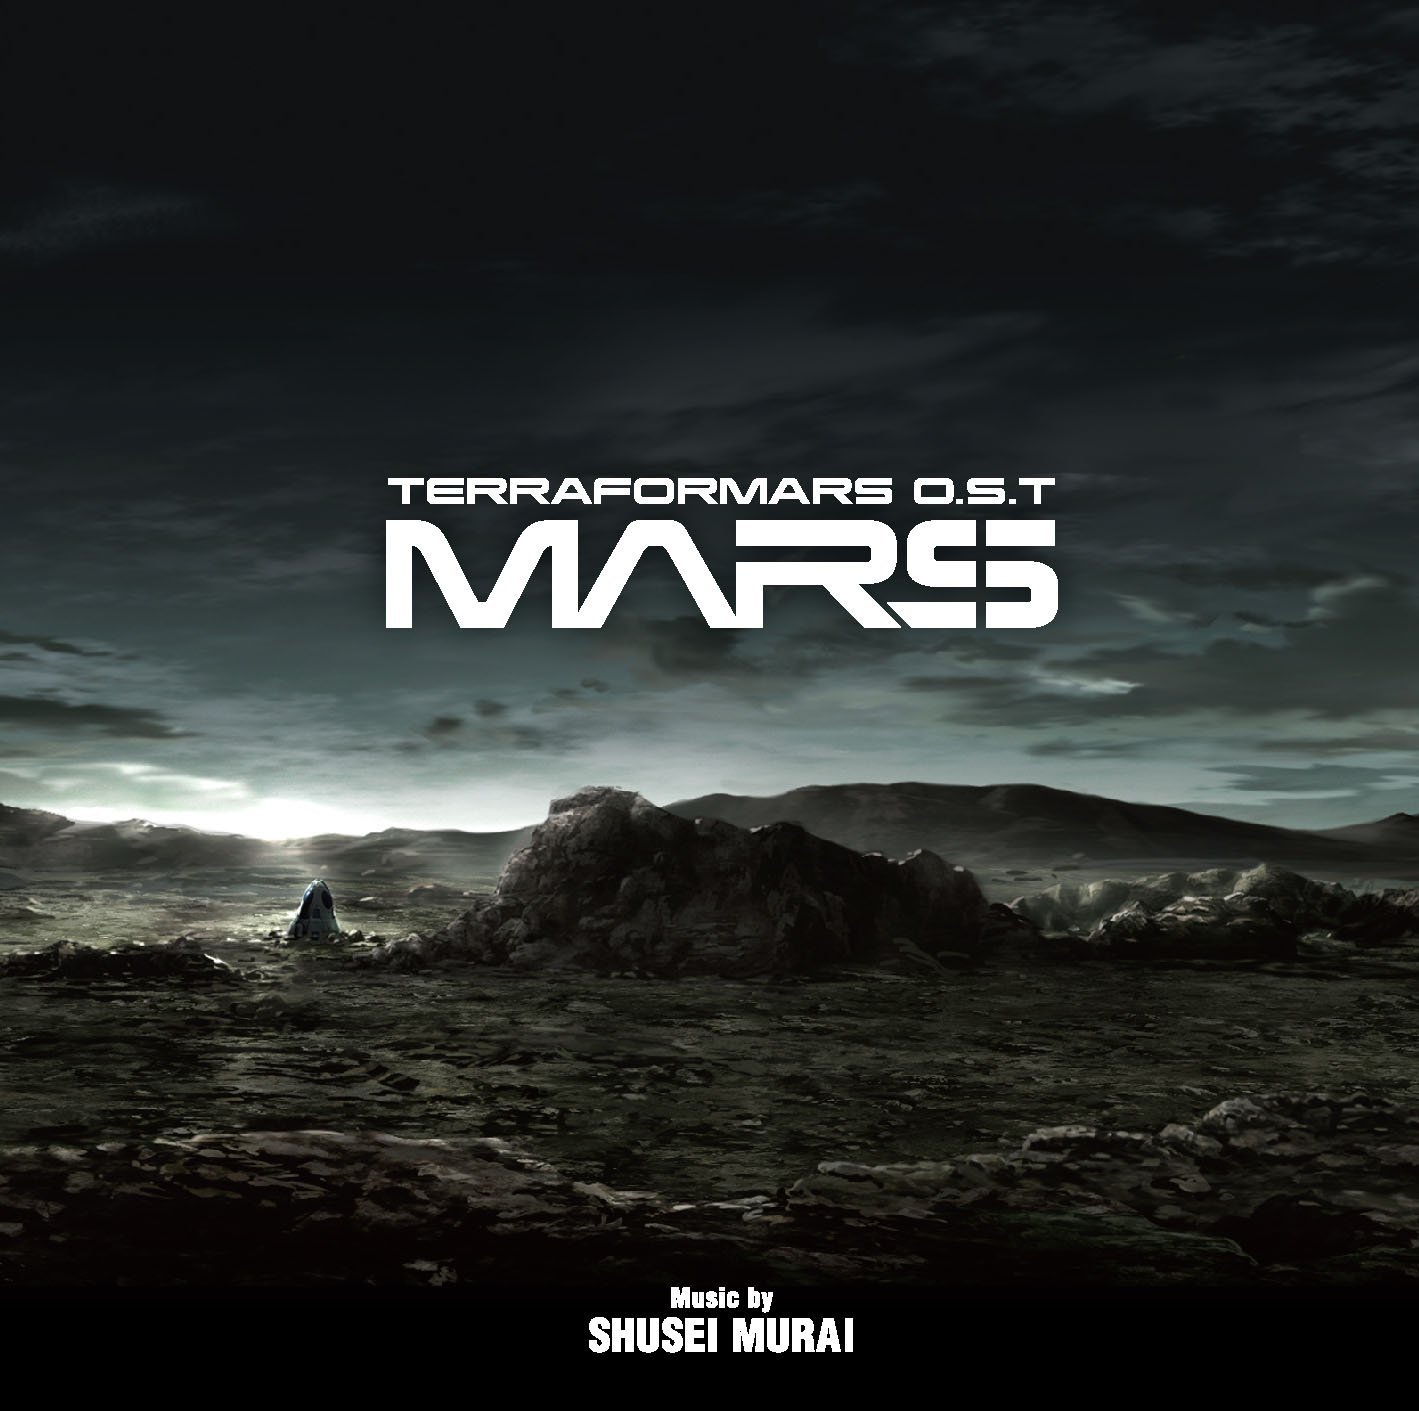 latest?cb=20141220120225 - TERRAFORMARS O.S.T MARS[32/32][Mega] - Música [Descarga]